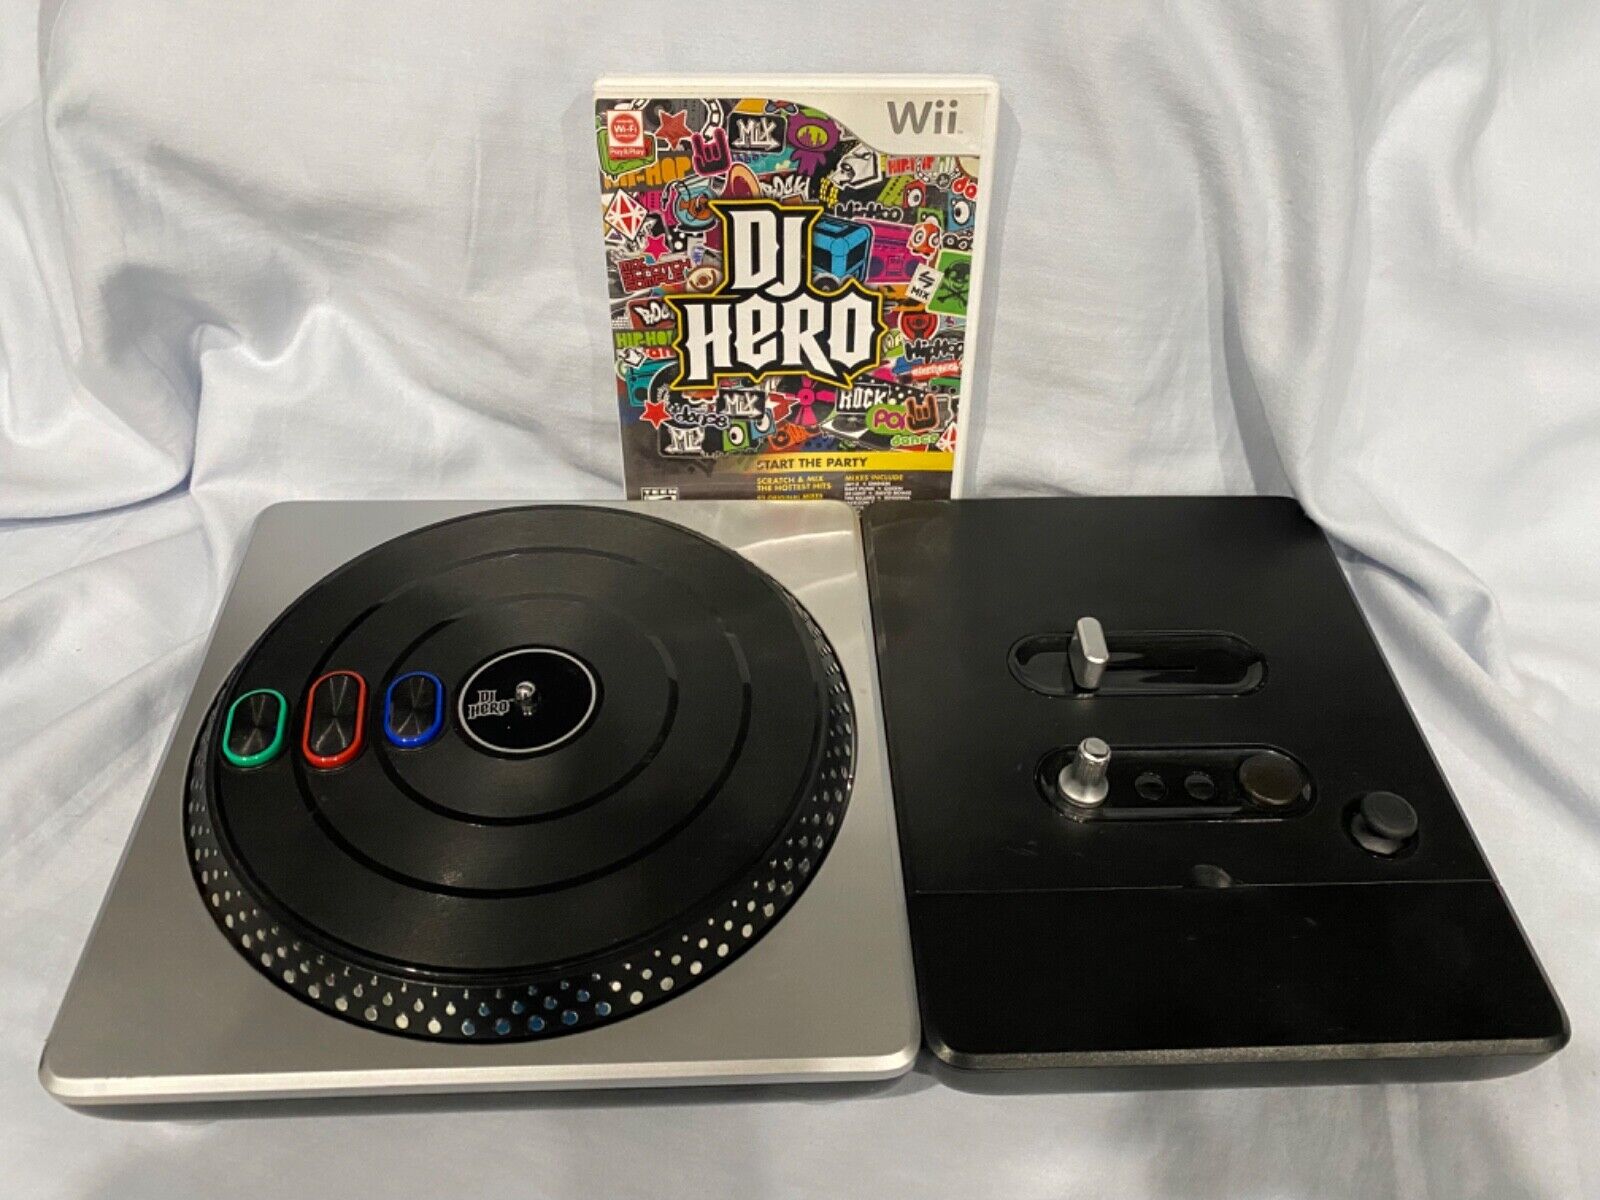 Where Can I Buy A DJ Hero Turntable